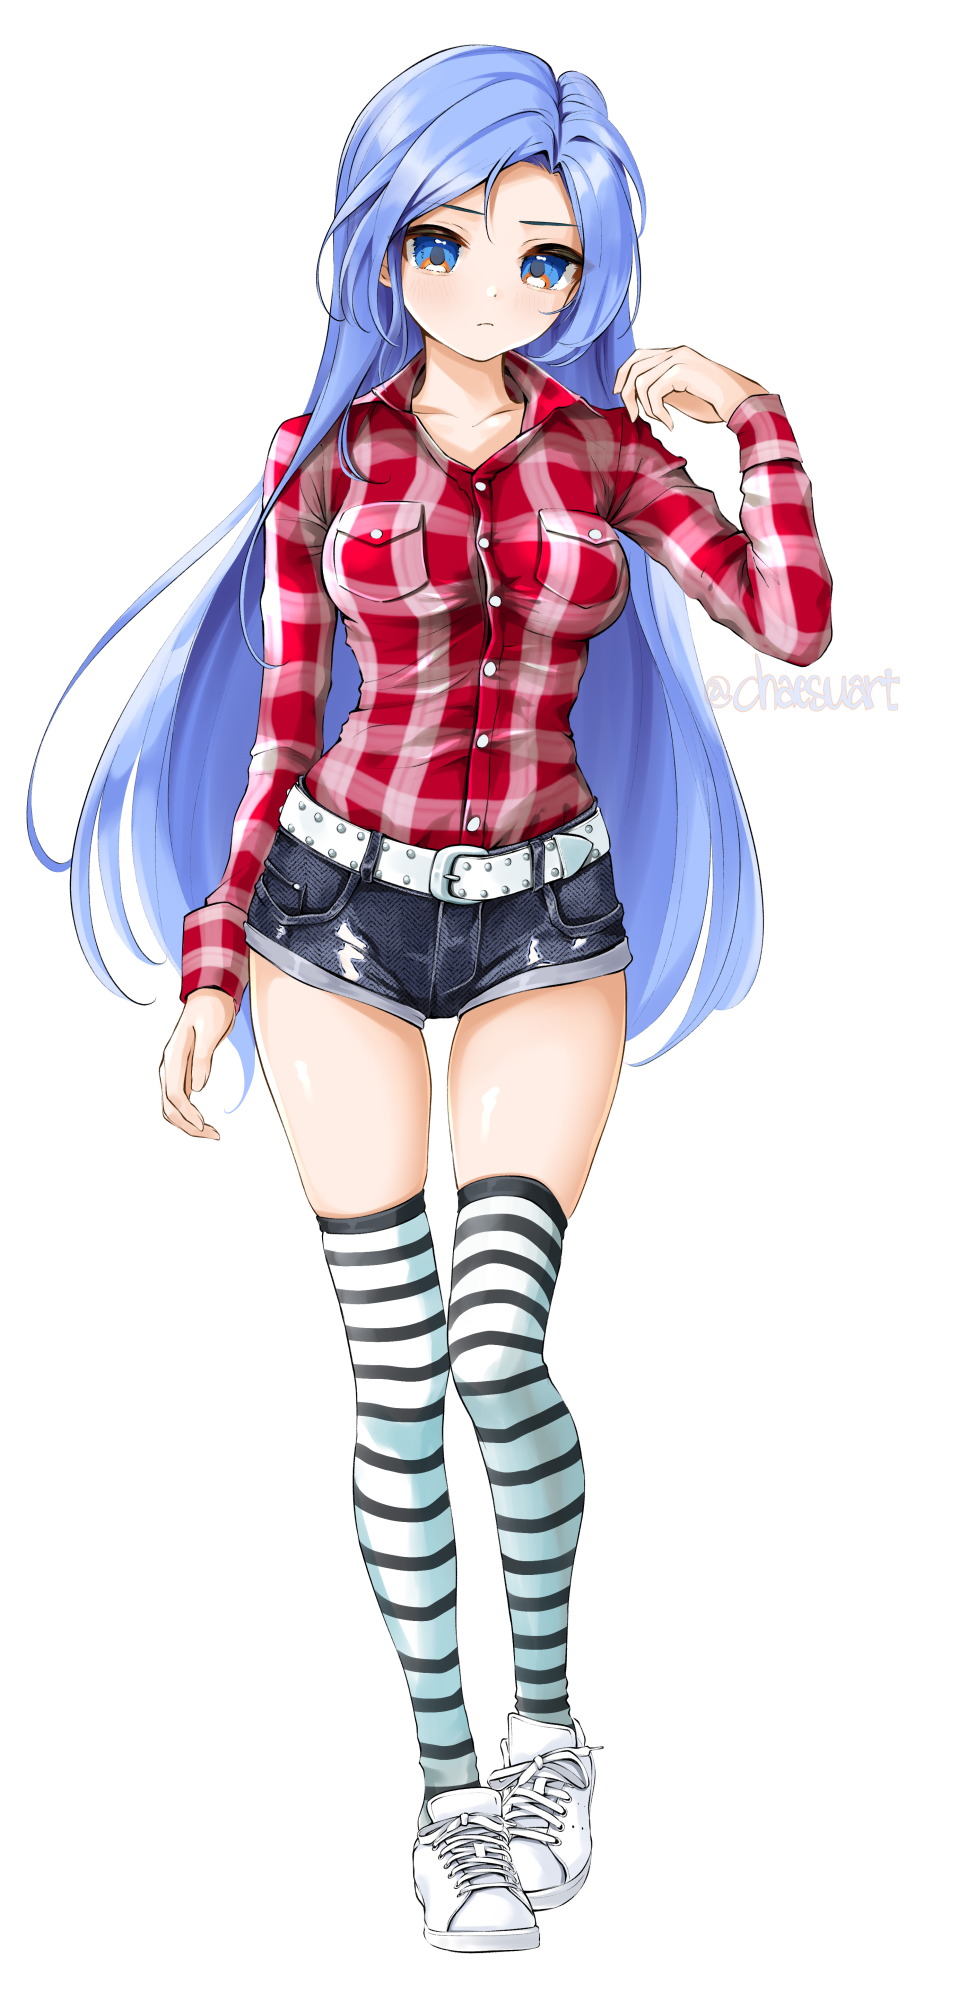 Anime 970x2000 Chaesu Pixiv 2D digital art anime anime girls shorts sneakers plaid plaid shirt petite blue hair